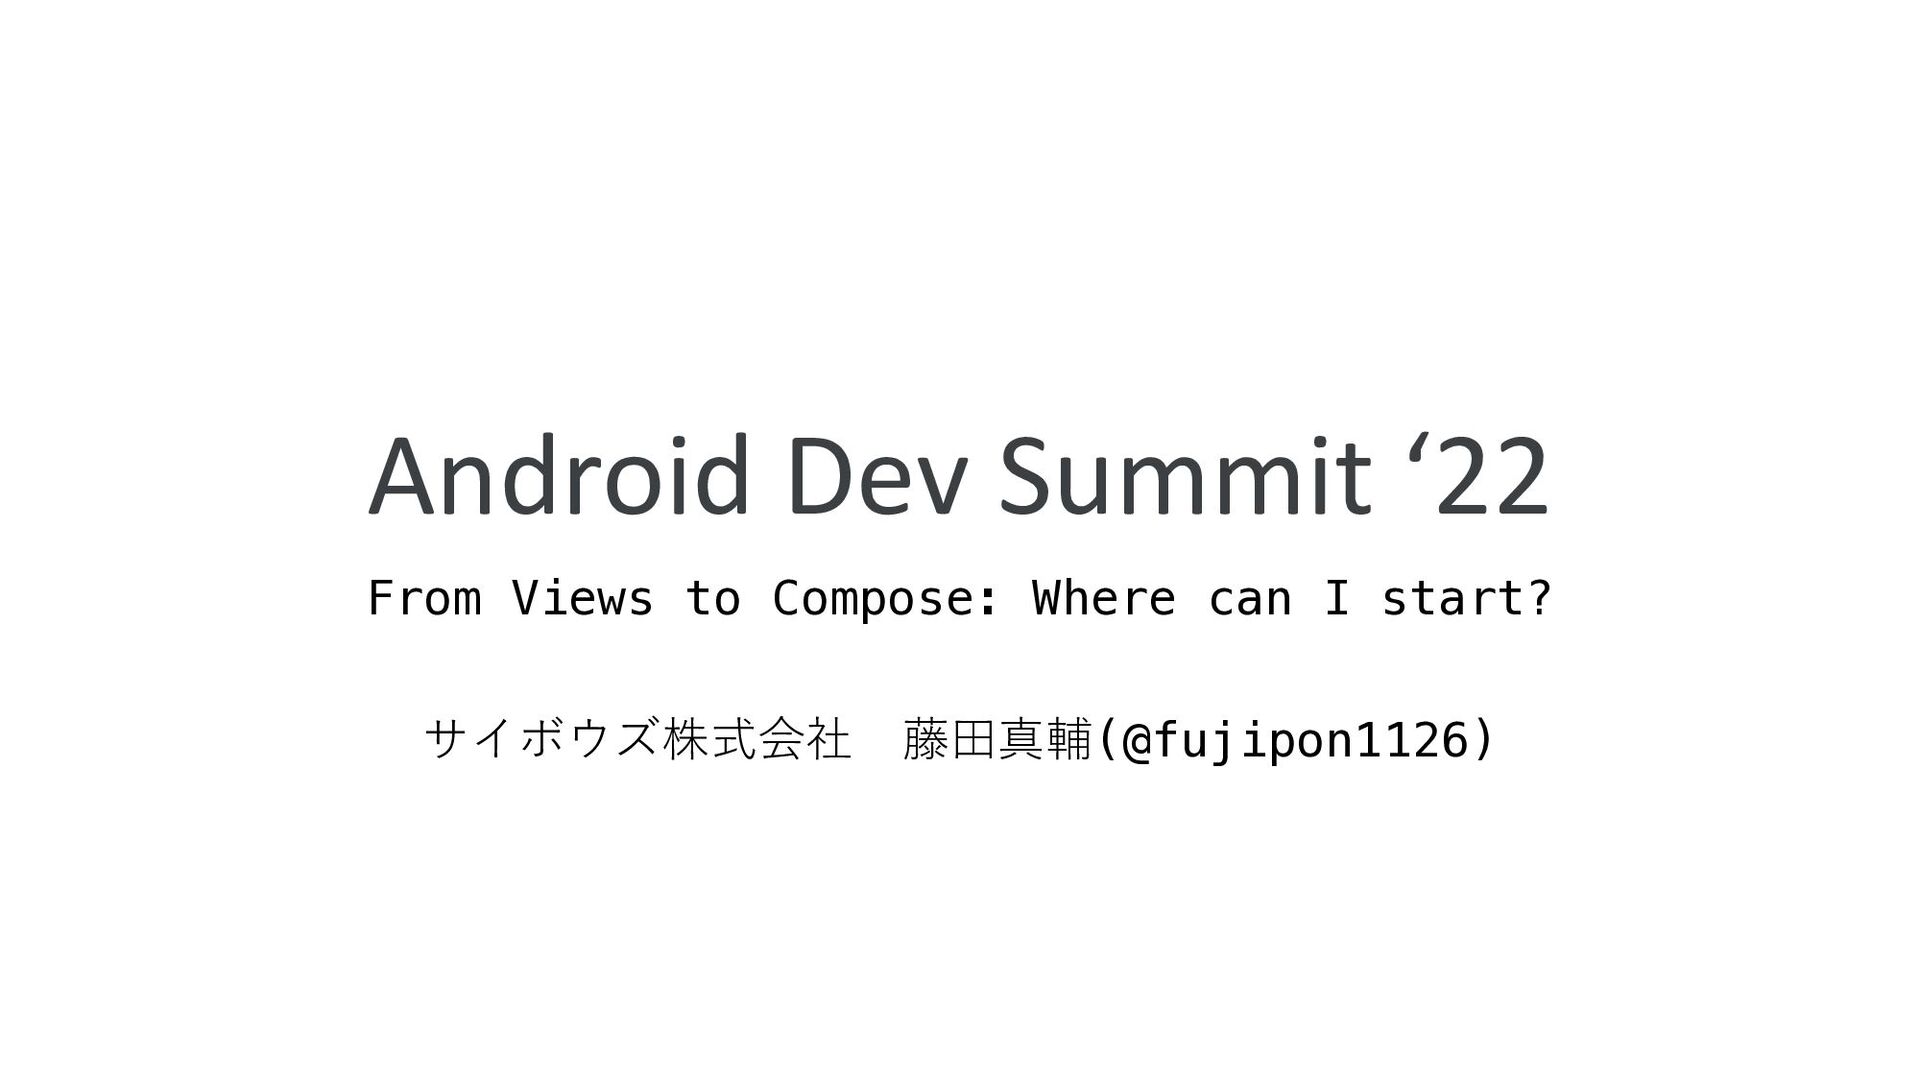 Slide Top: AndroidDevSummit2022